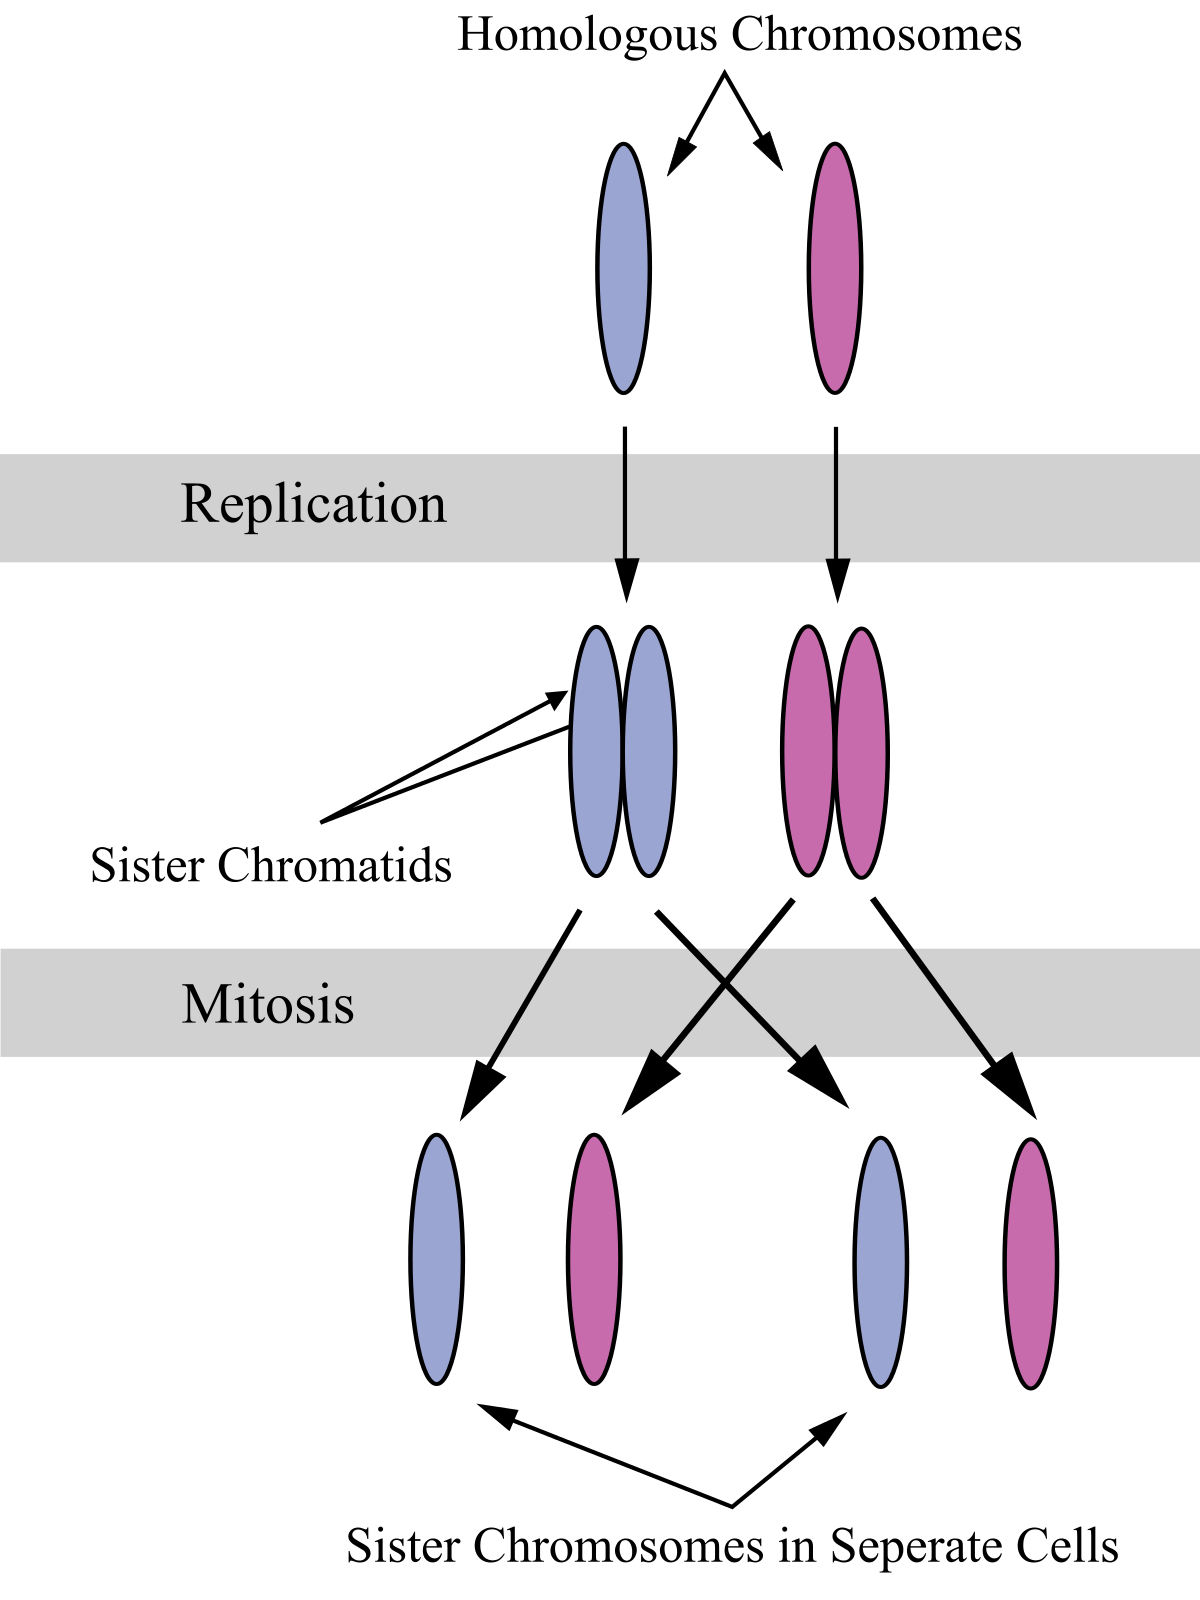 homologous chromosomes and sister chromatids